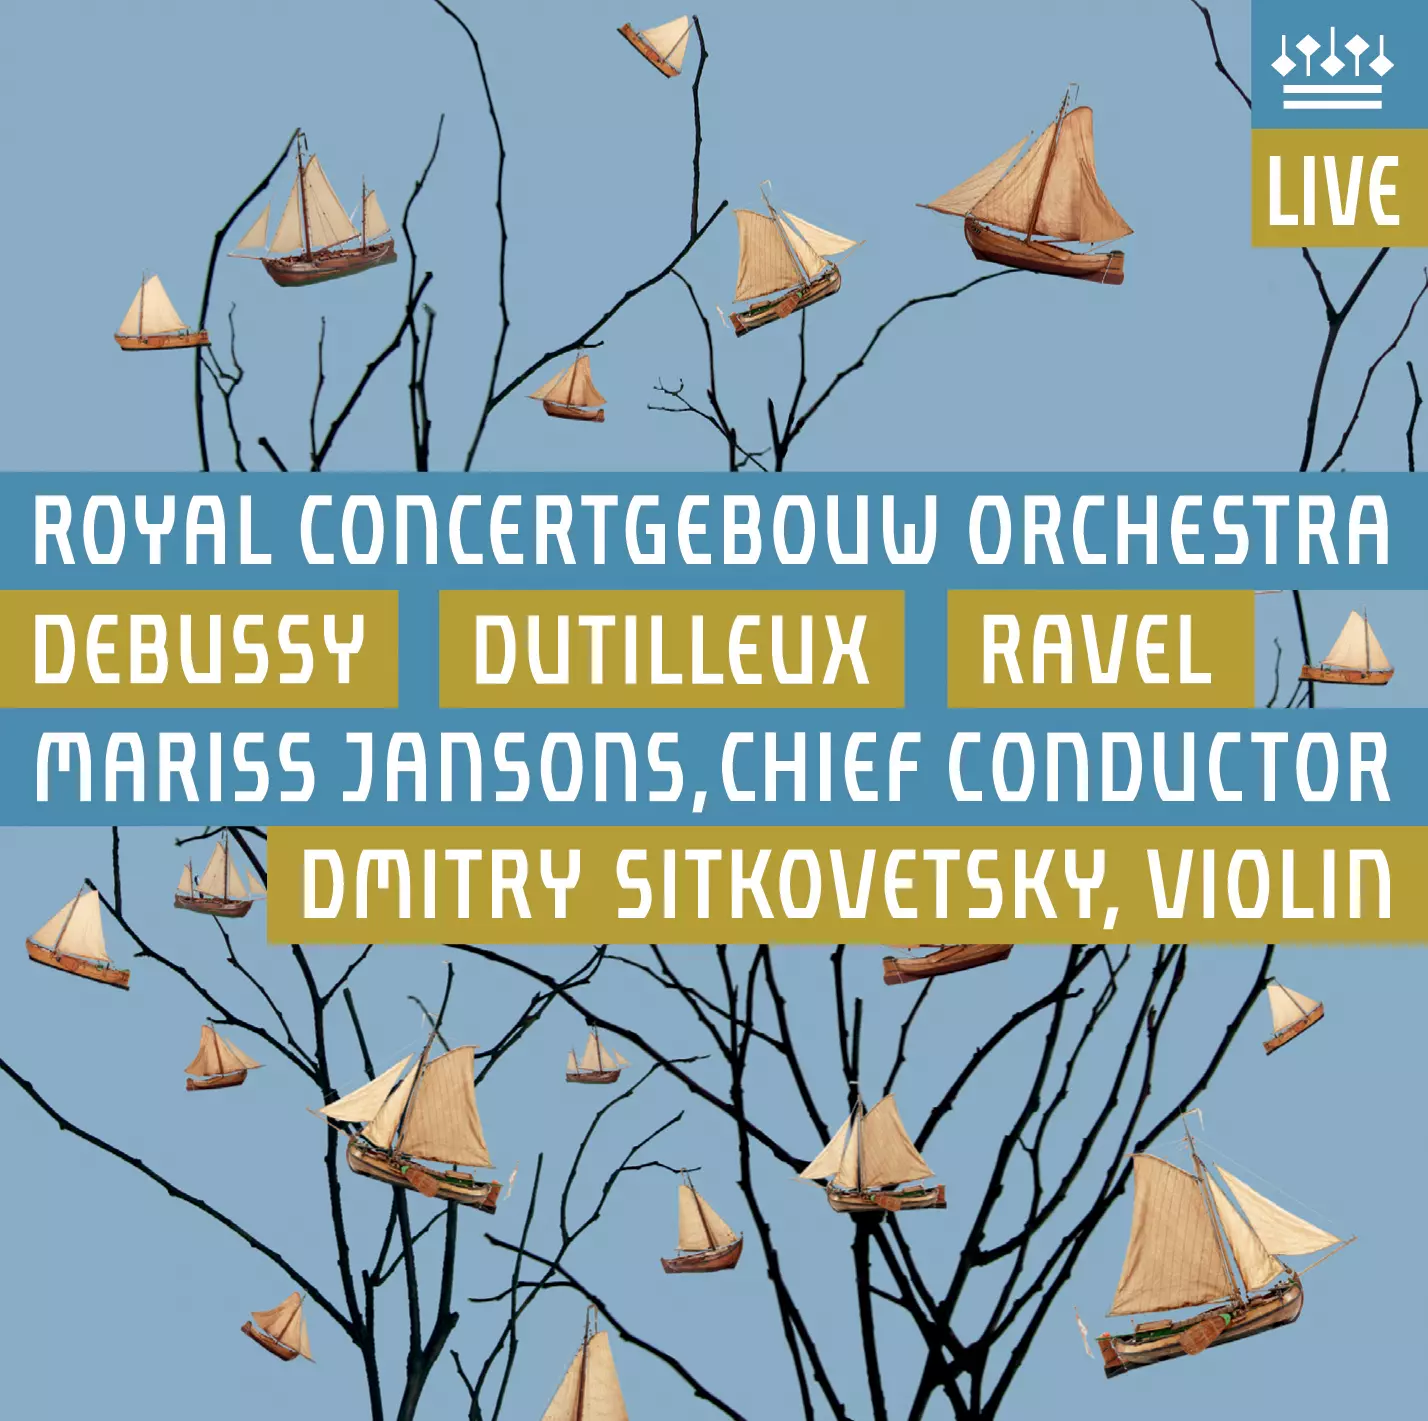 Royal Concertgebouw Orchestra, Debussy, Dutilleux & Ravel